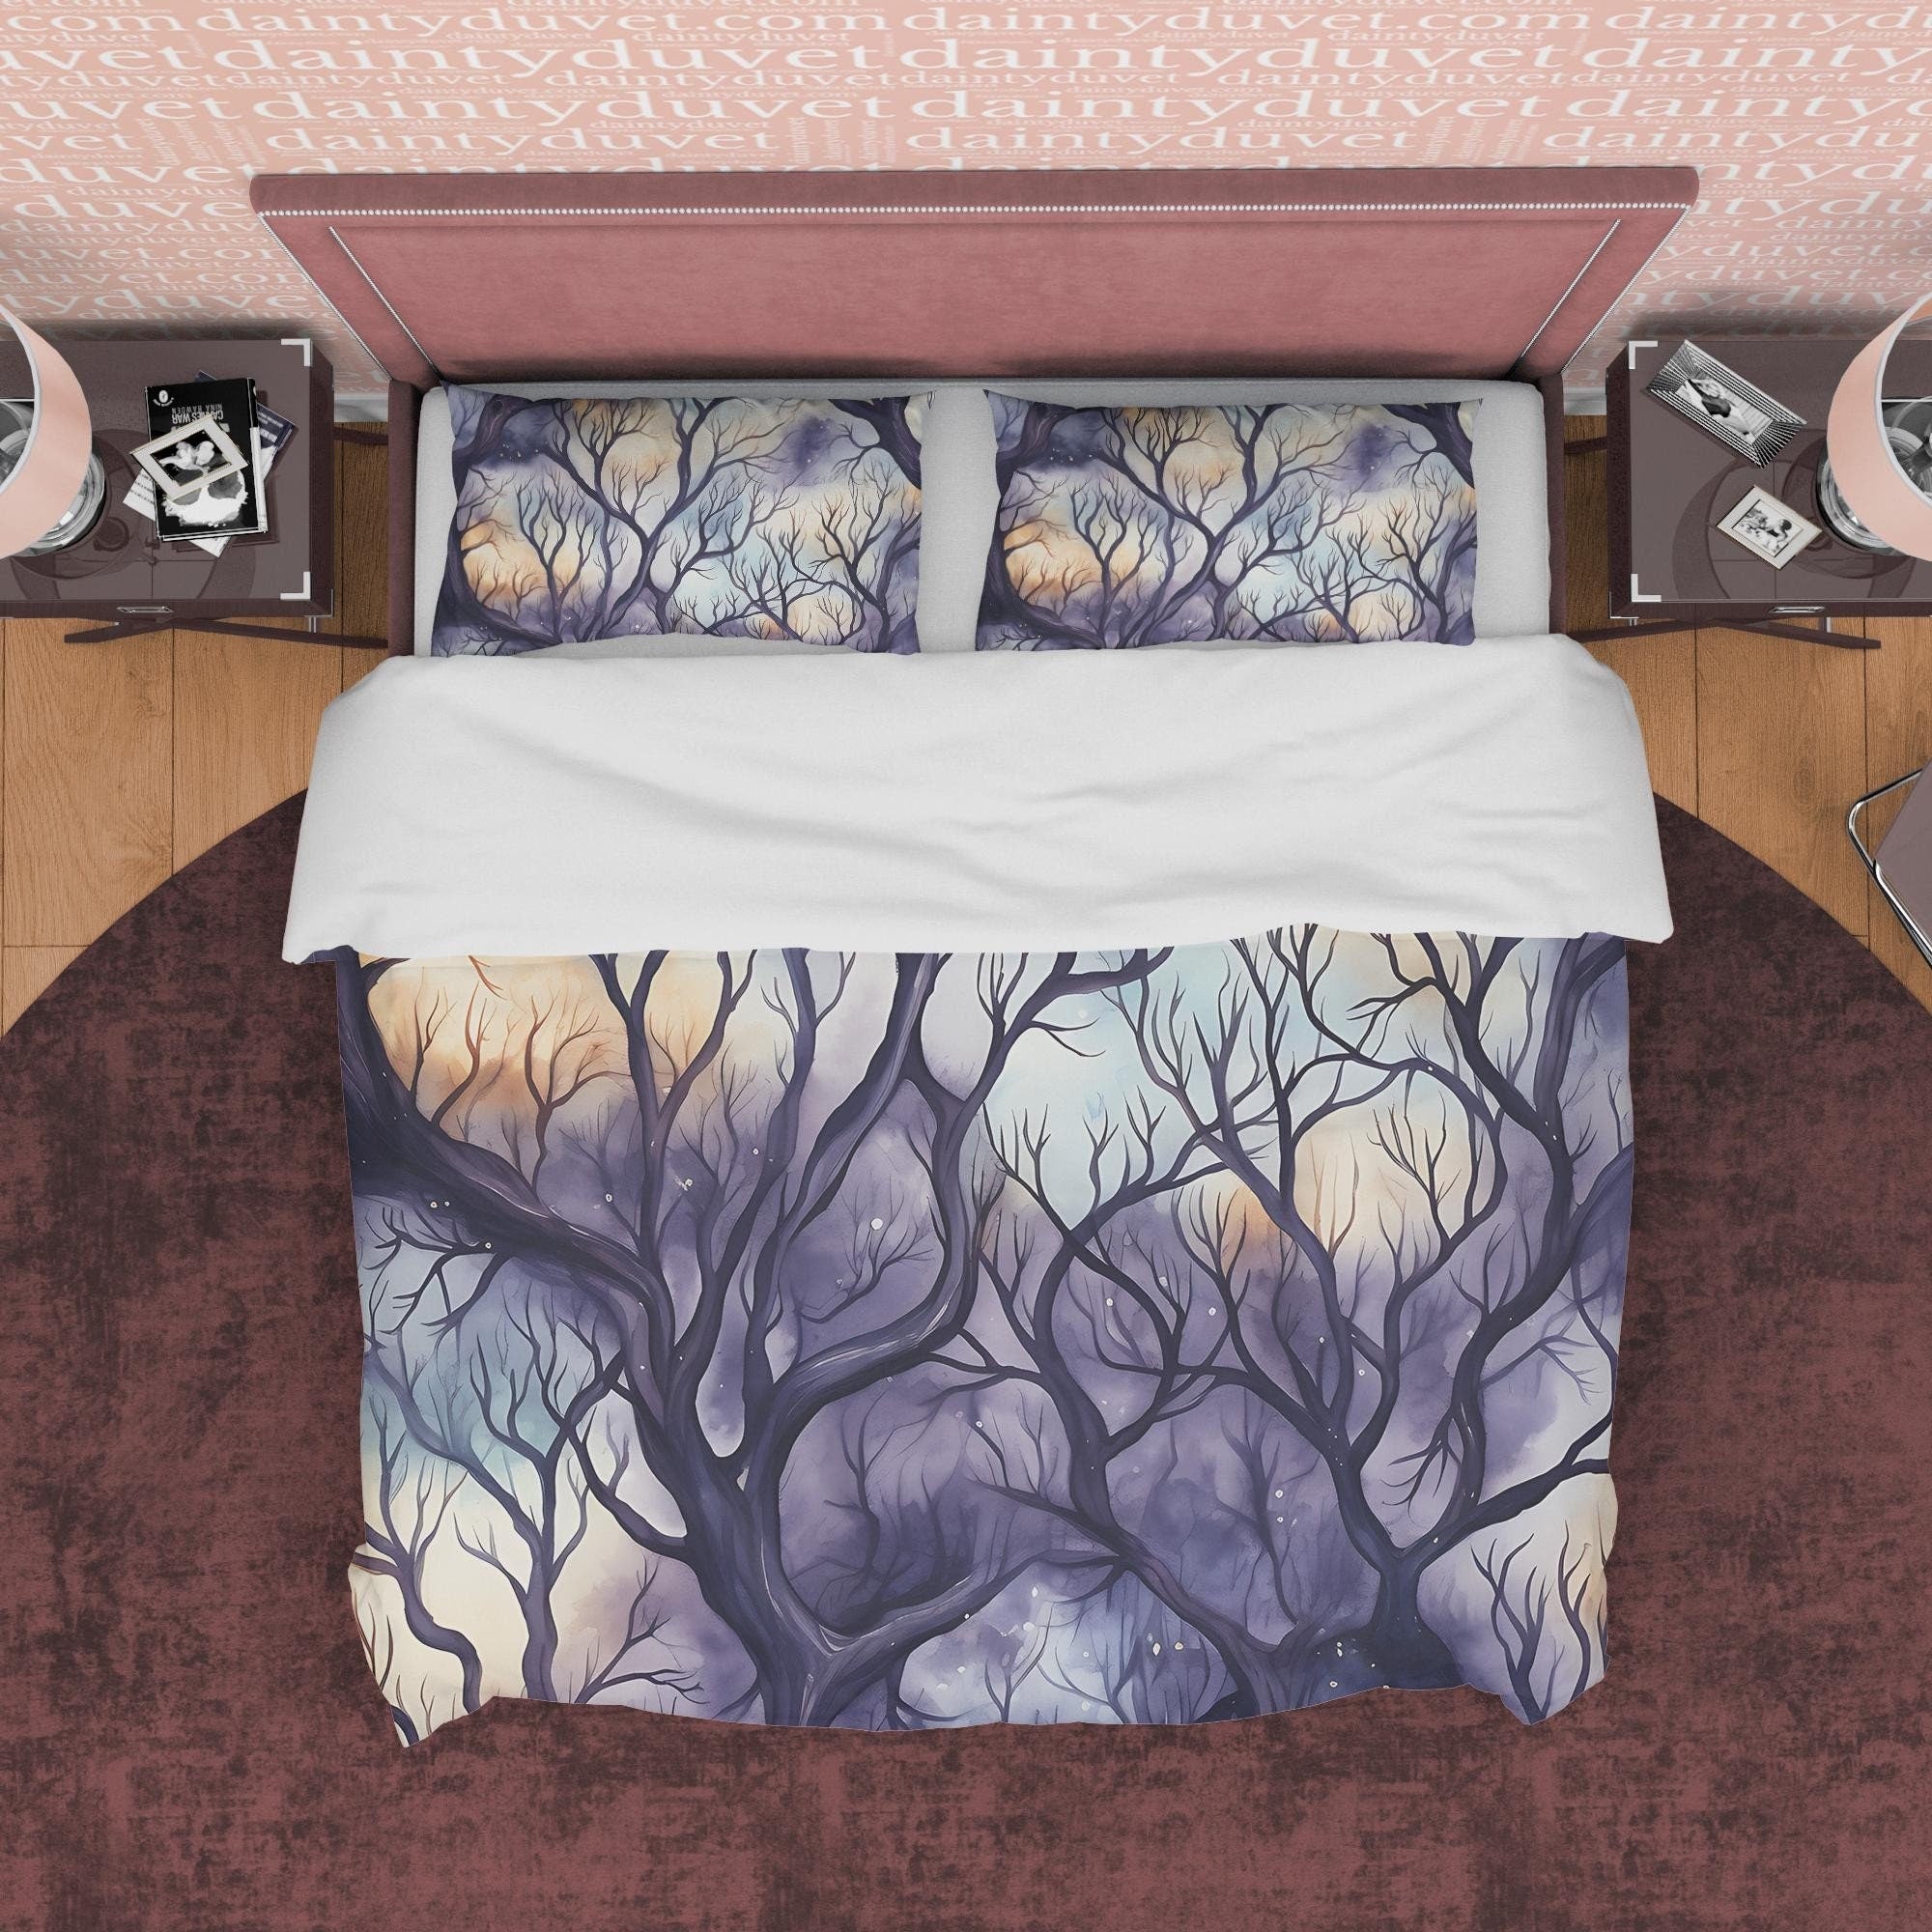 Mysterious Forest, Purple Sky, Winter Halloween Duvet Cover Set, Aesthetic Bedding, Spooky Room Decor, US, European, Australian Sizes